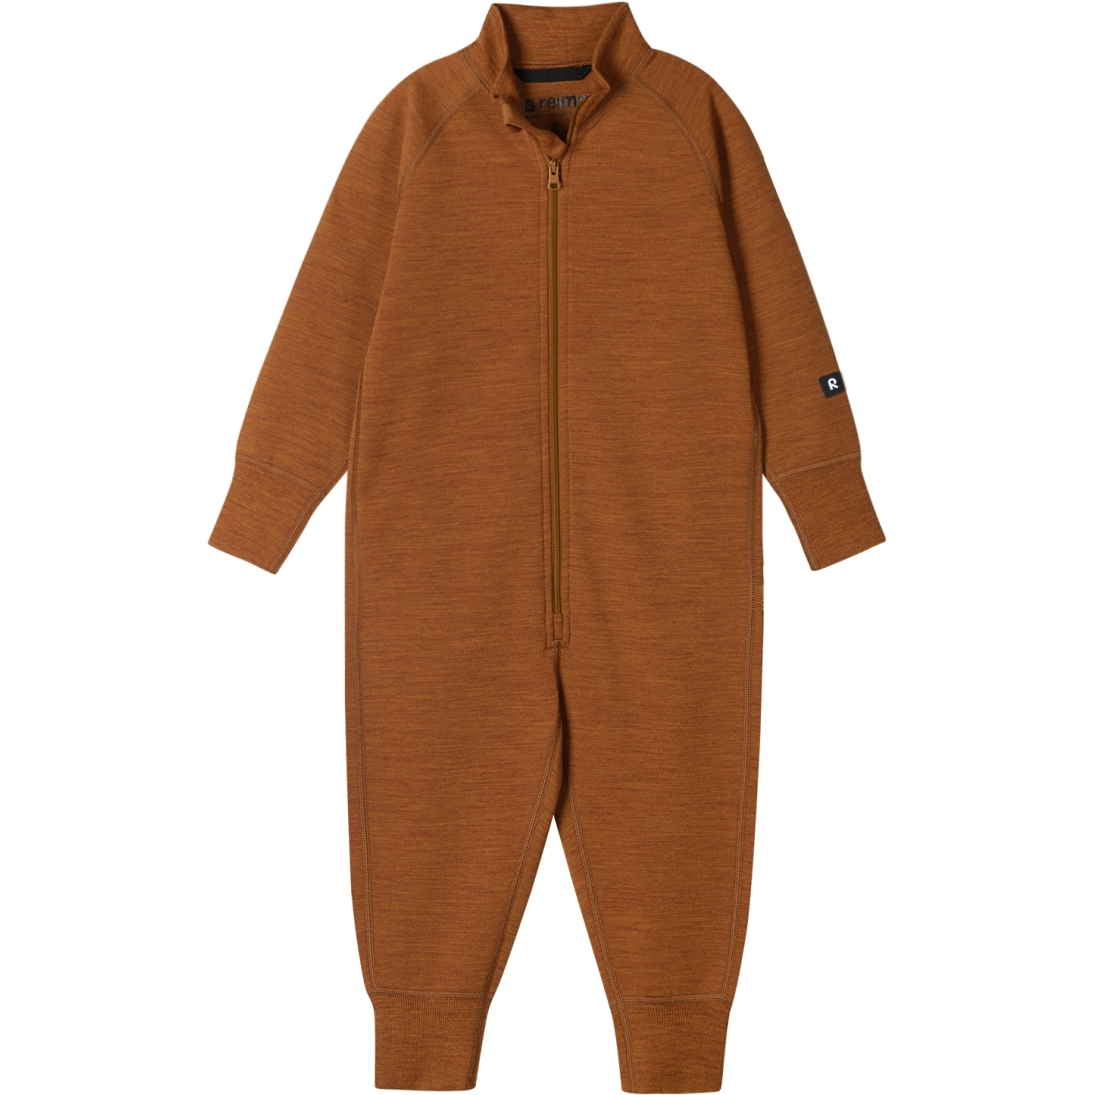 Reima Parvin Overall Toddler - cinnamon brown 1490 | BIKE24